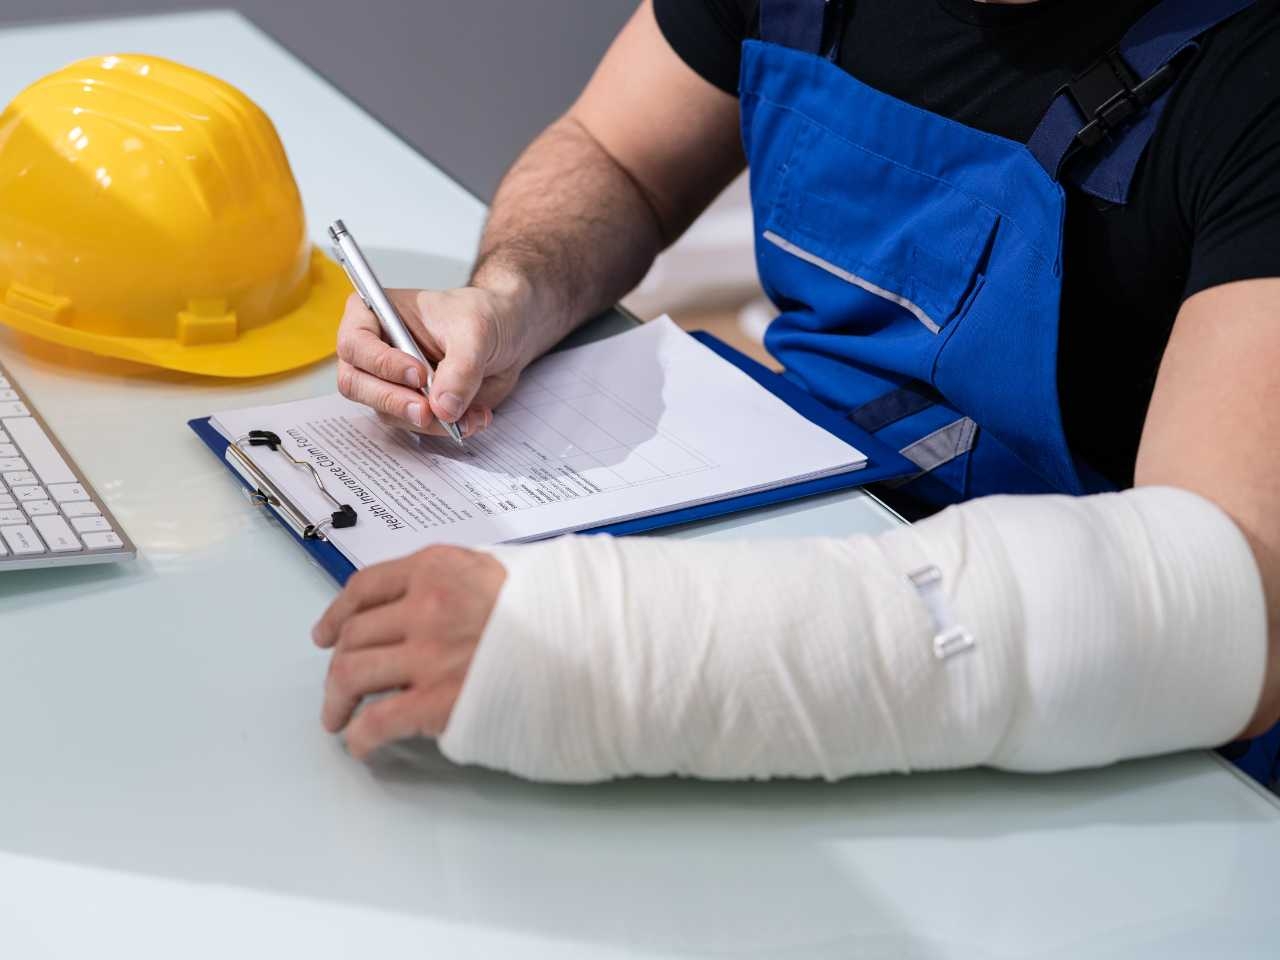 a construction employee with a broken arm fills out a written form